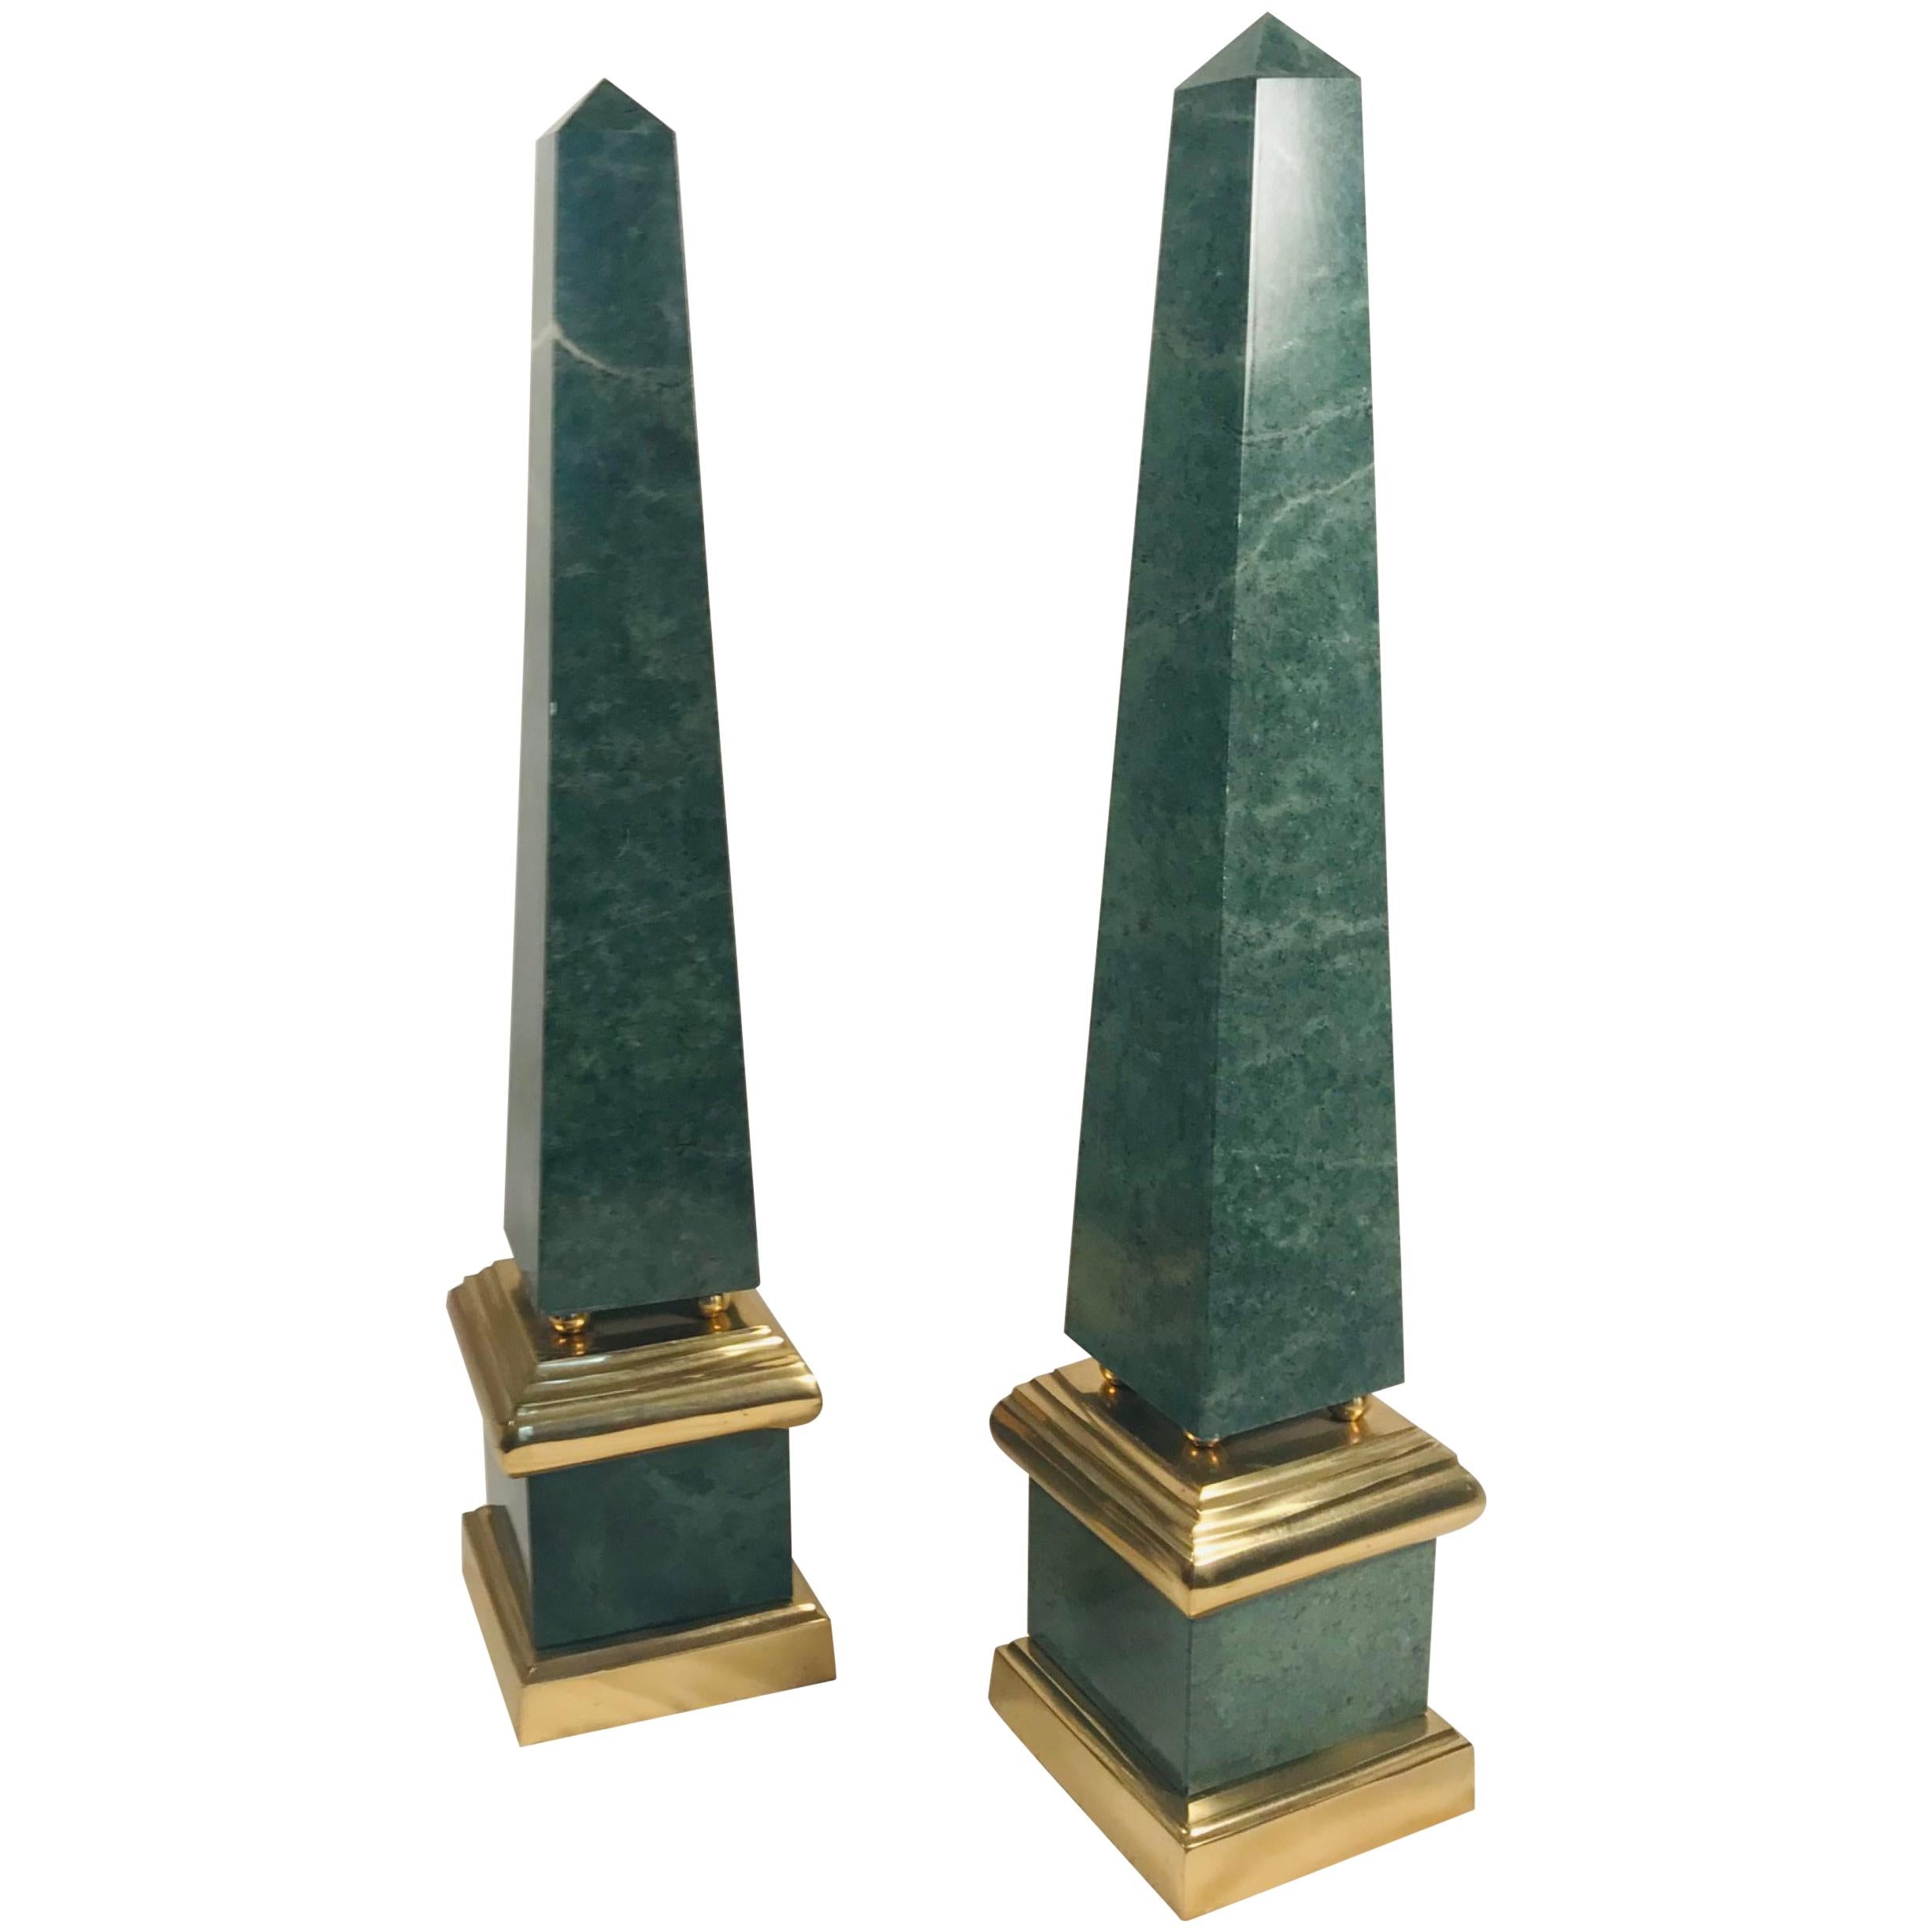 Pair of Vintage Large Green Obelisks, Brass Mounted